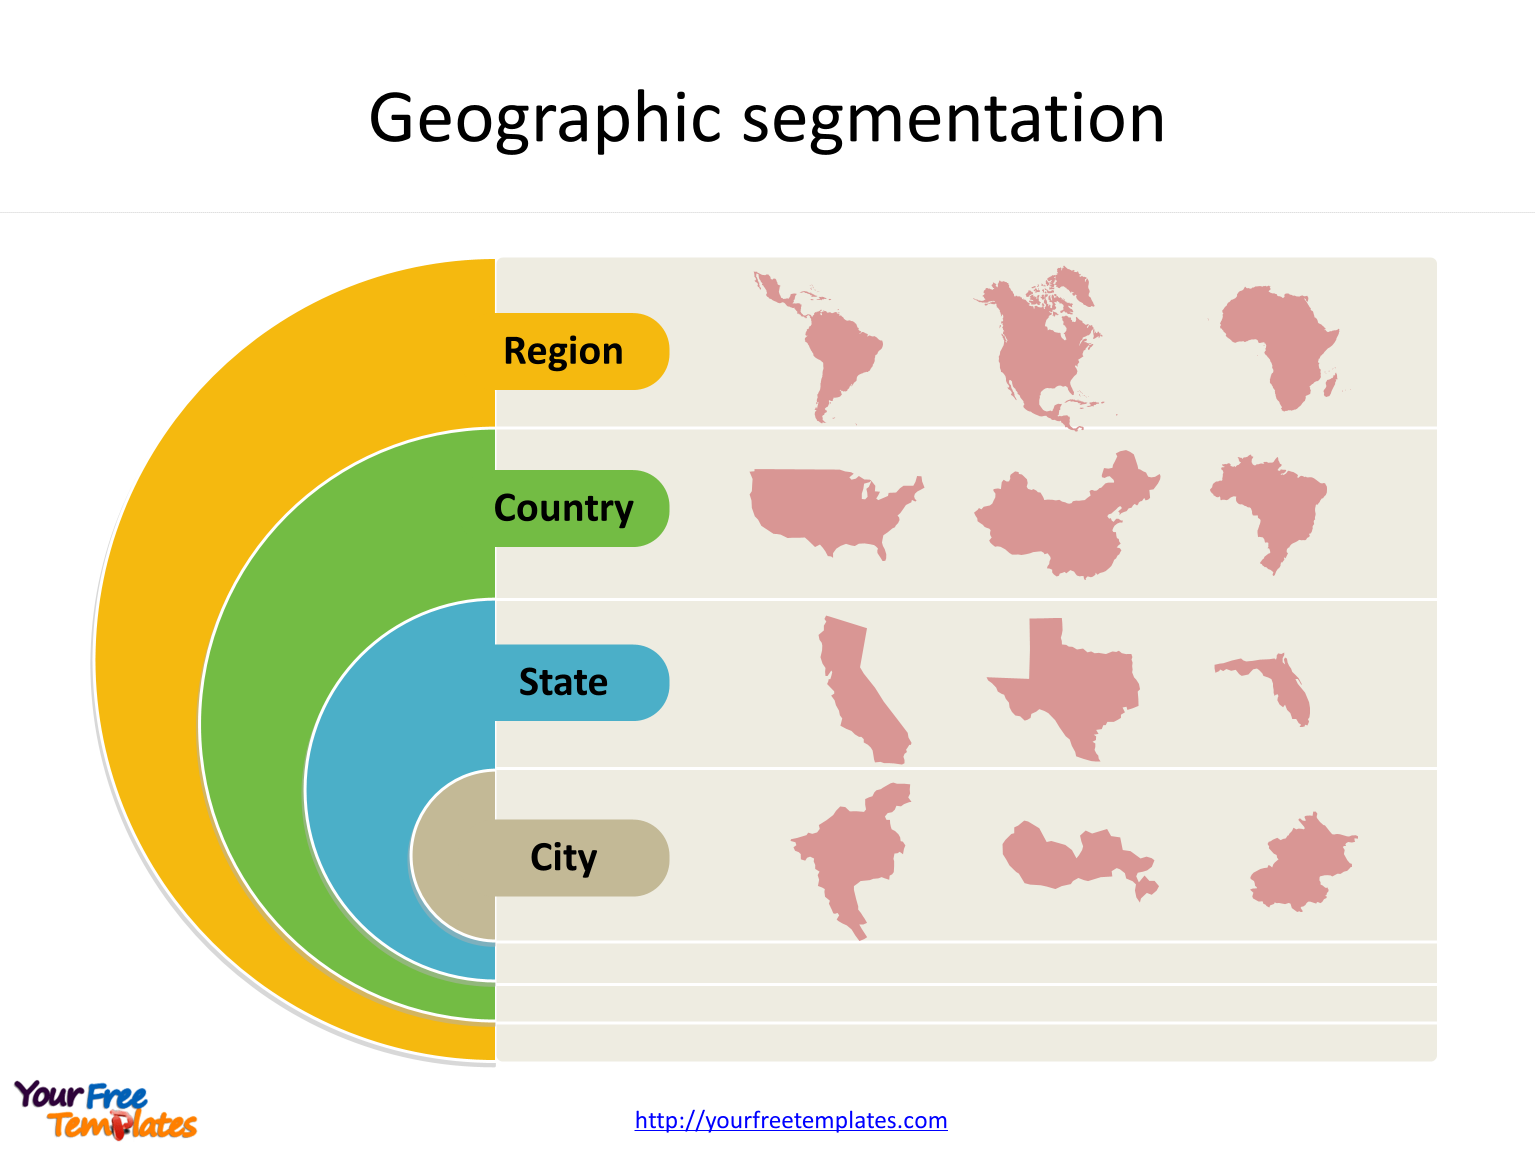 Consumer segmentation template of Geographic segmentation